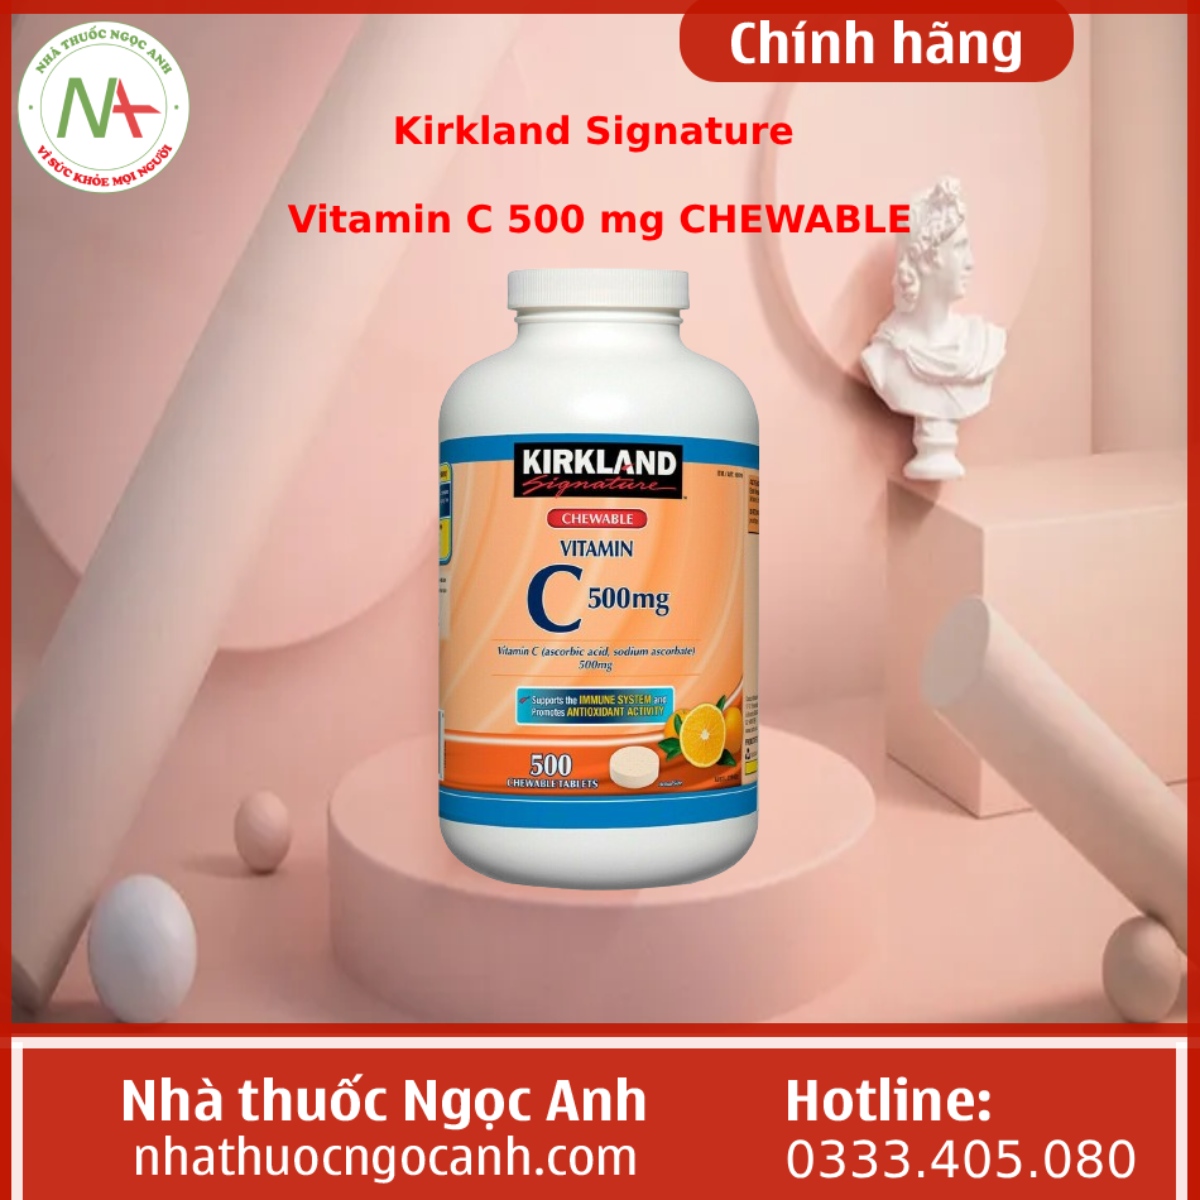 Kirkland Signature Vitamin C 500 mg CHEWABLE